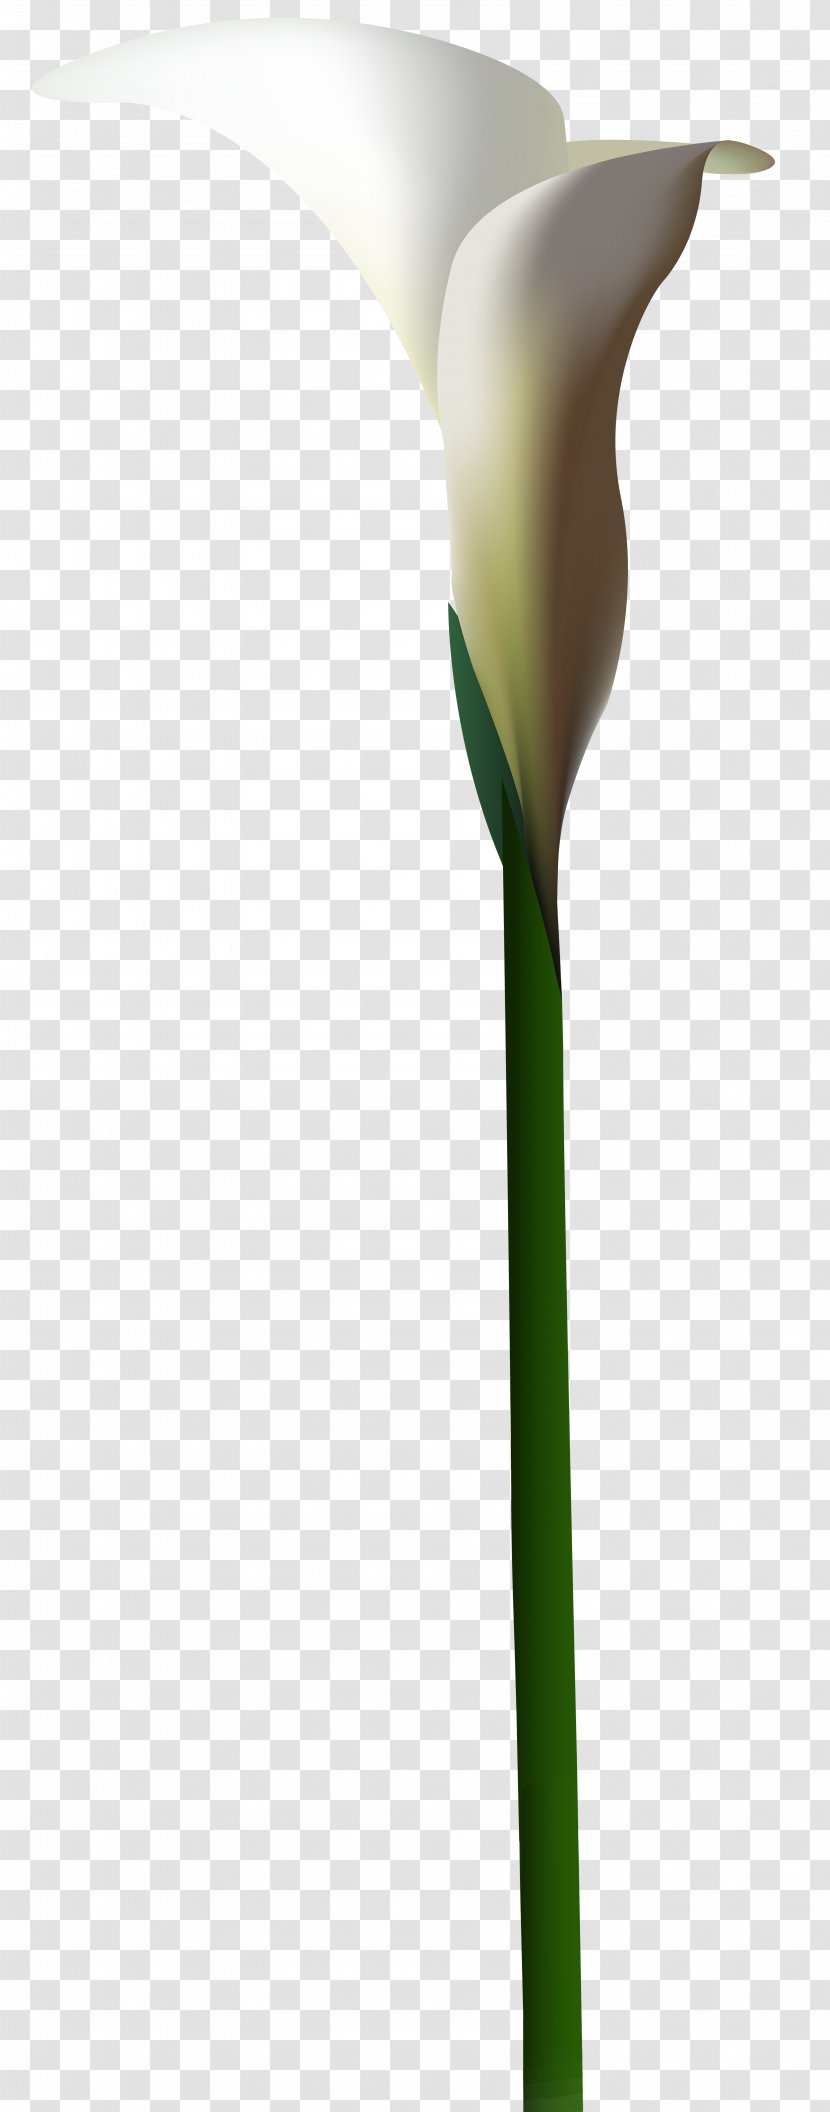 Product Plant Stem Design - Arum - Calla Lily Flower Clip Art Image Transparent PNG